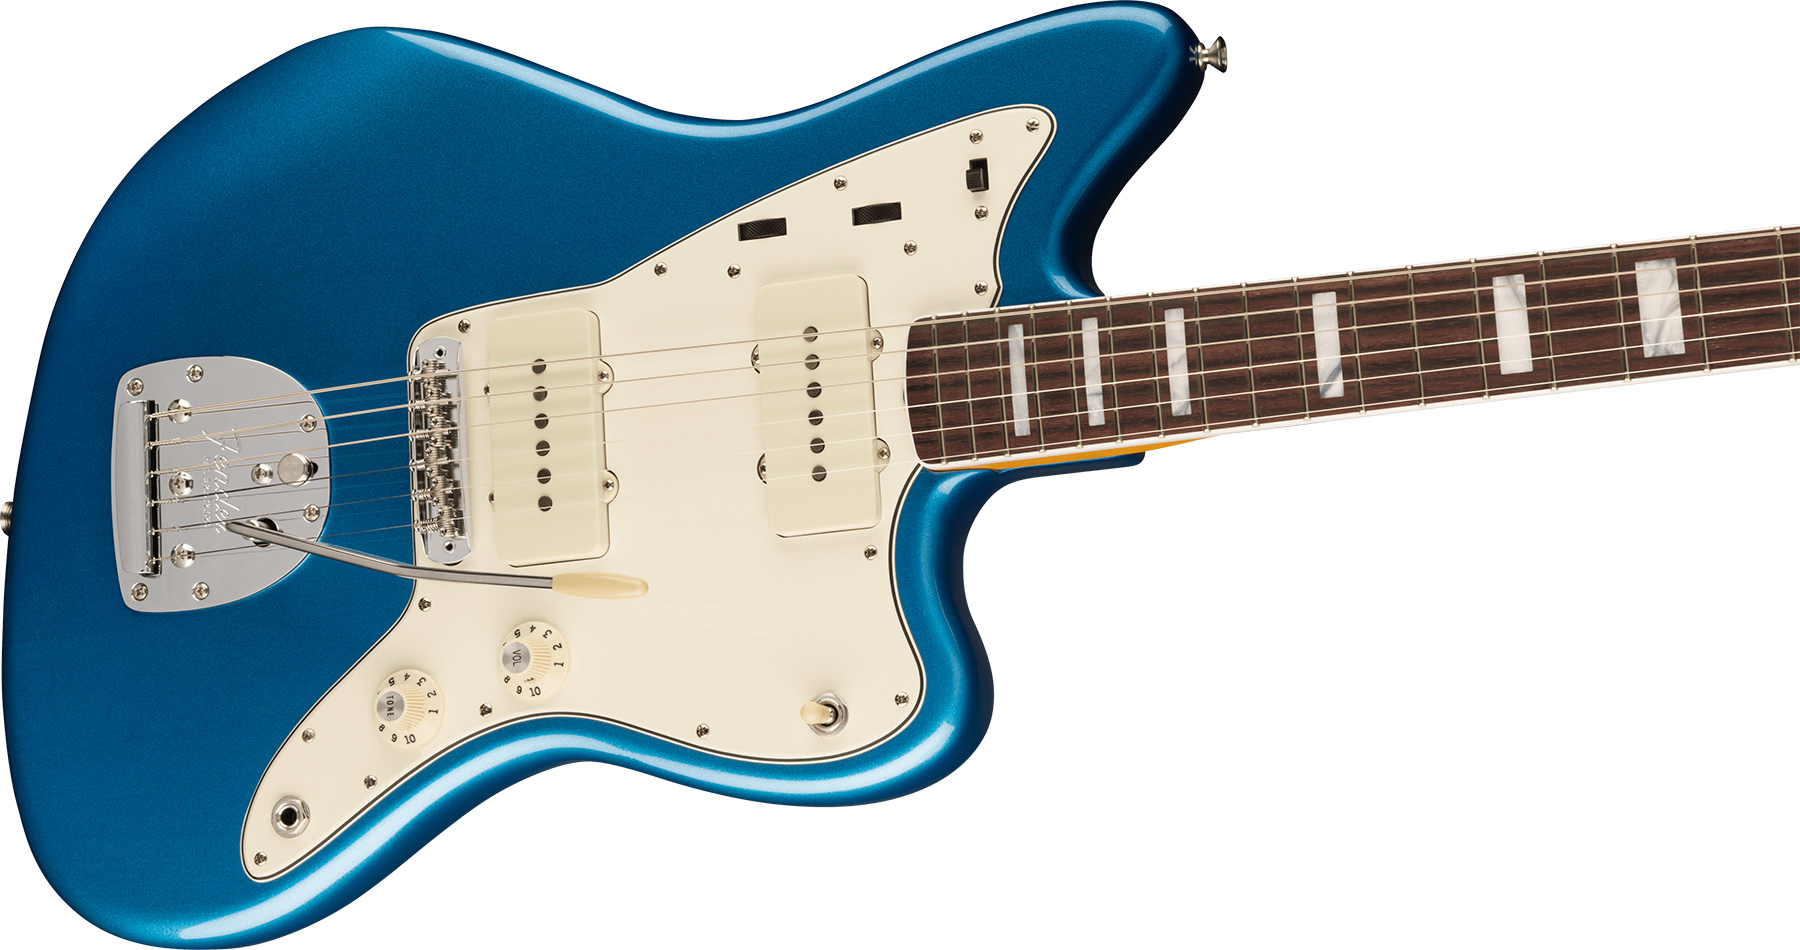 Fender Jazzmaster 1966 American Vintage Ii Usa Sh Trem Rw - Lake Placid Blue - Retro rock electric guitar - Variation 2